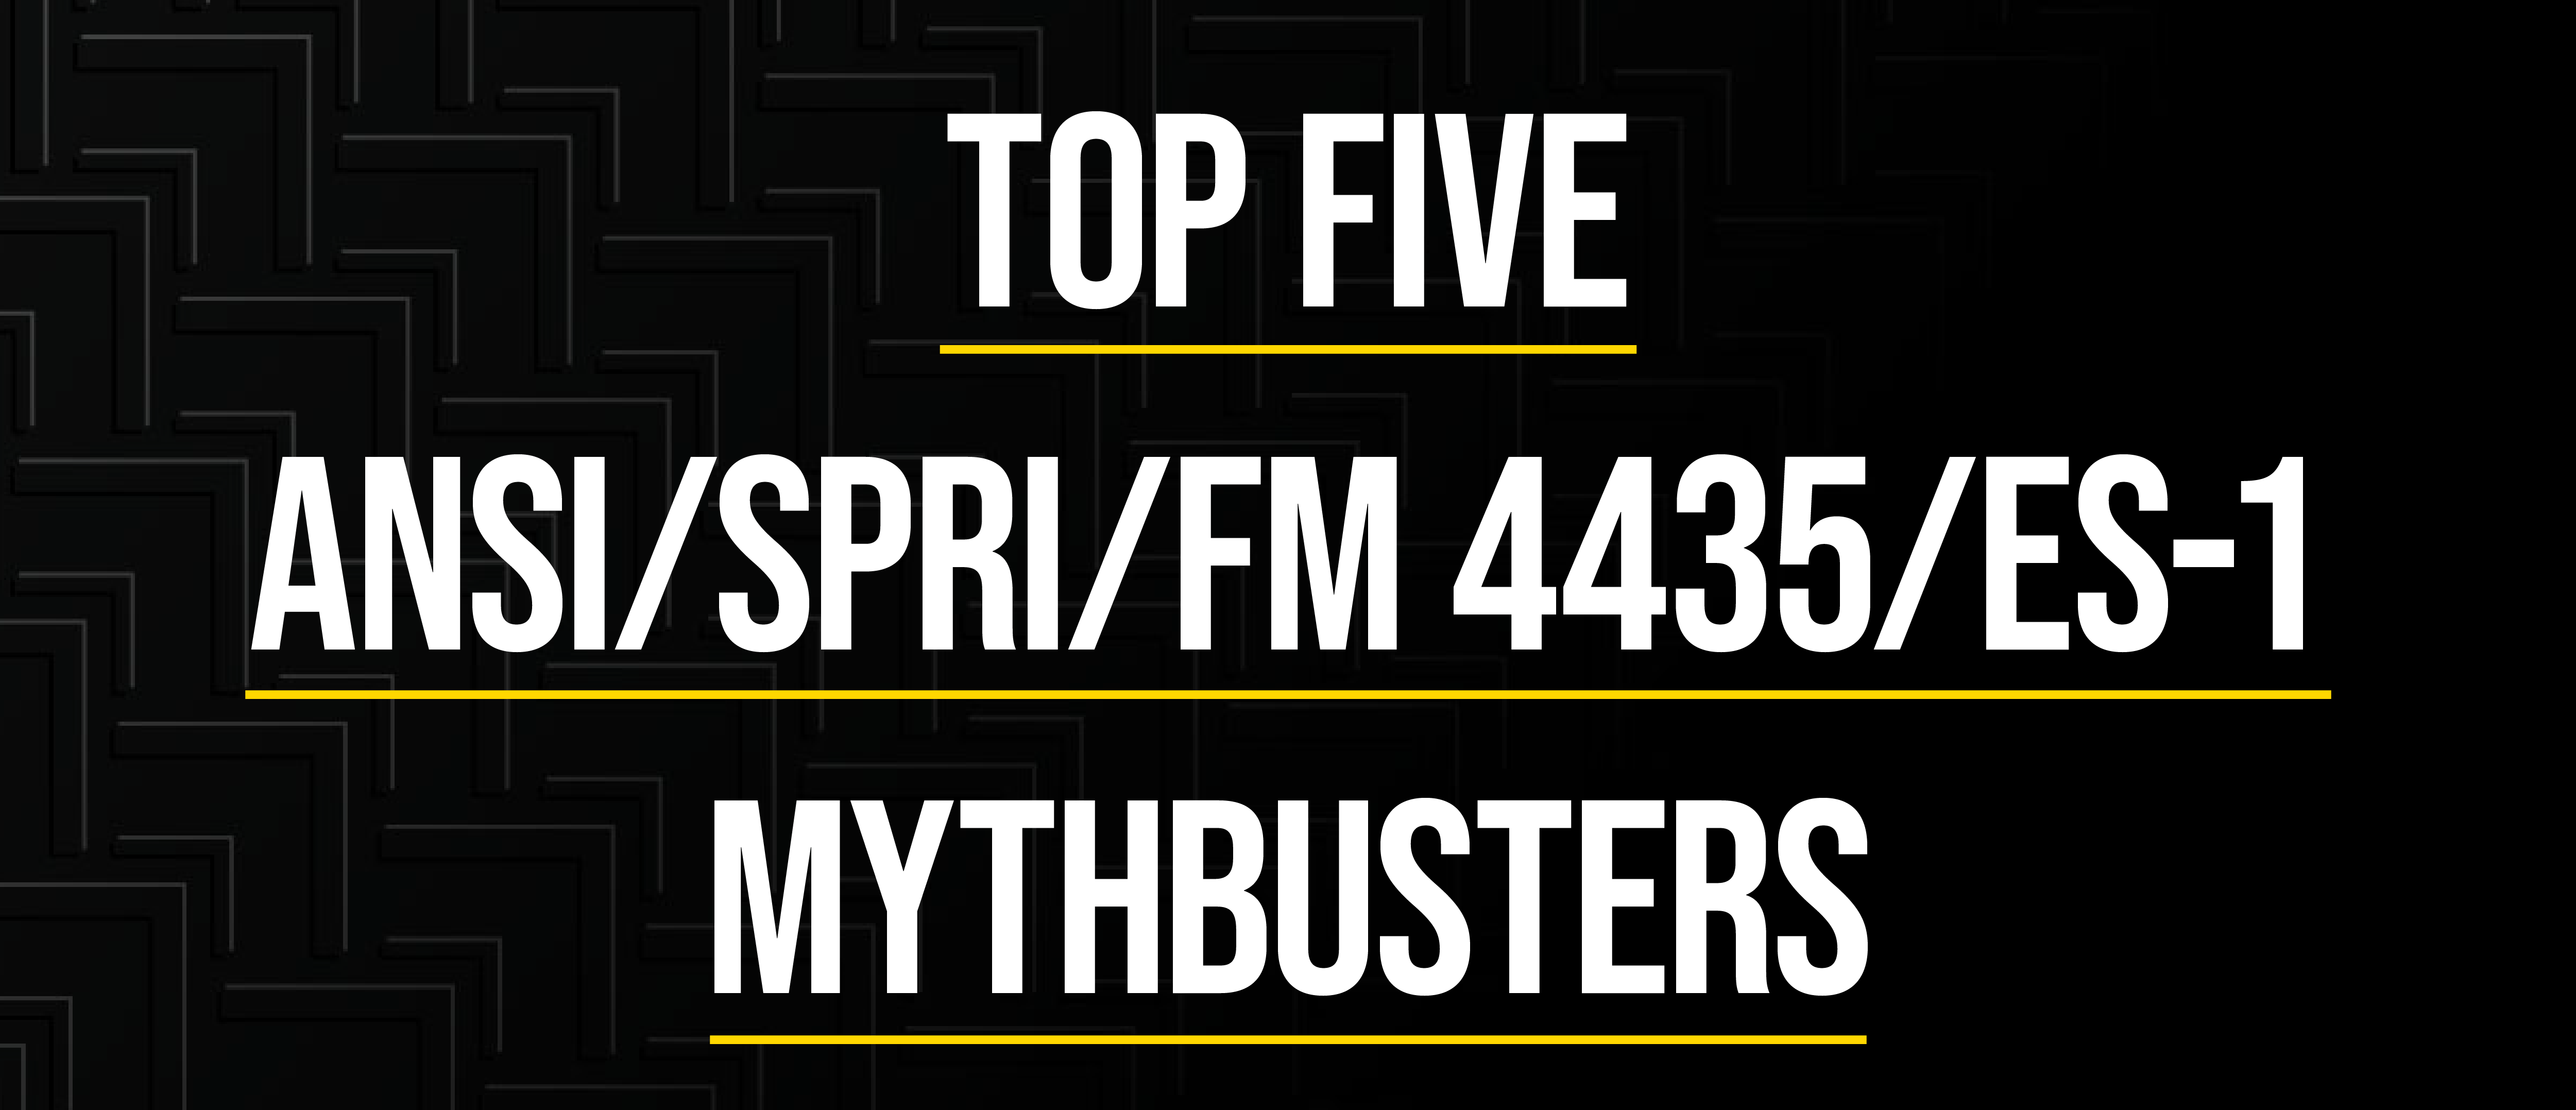 Top Five ANSI/SPRI/FM 4435/ES-1 Mythbusters